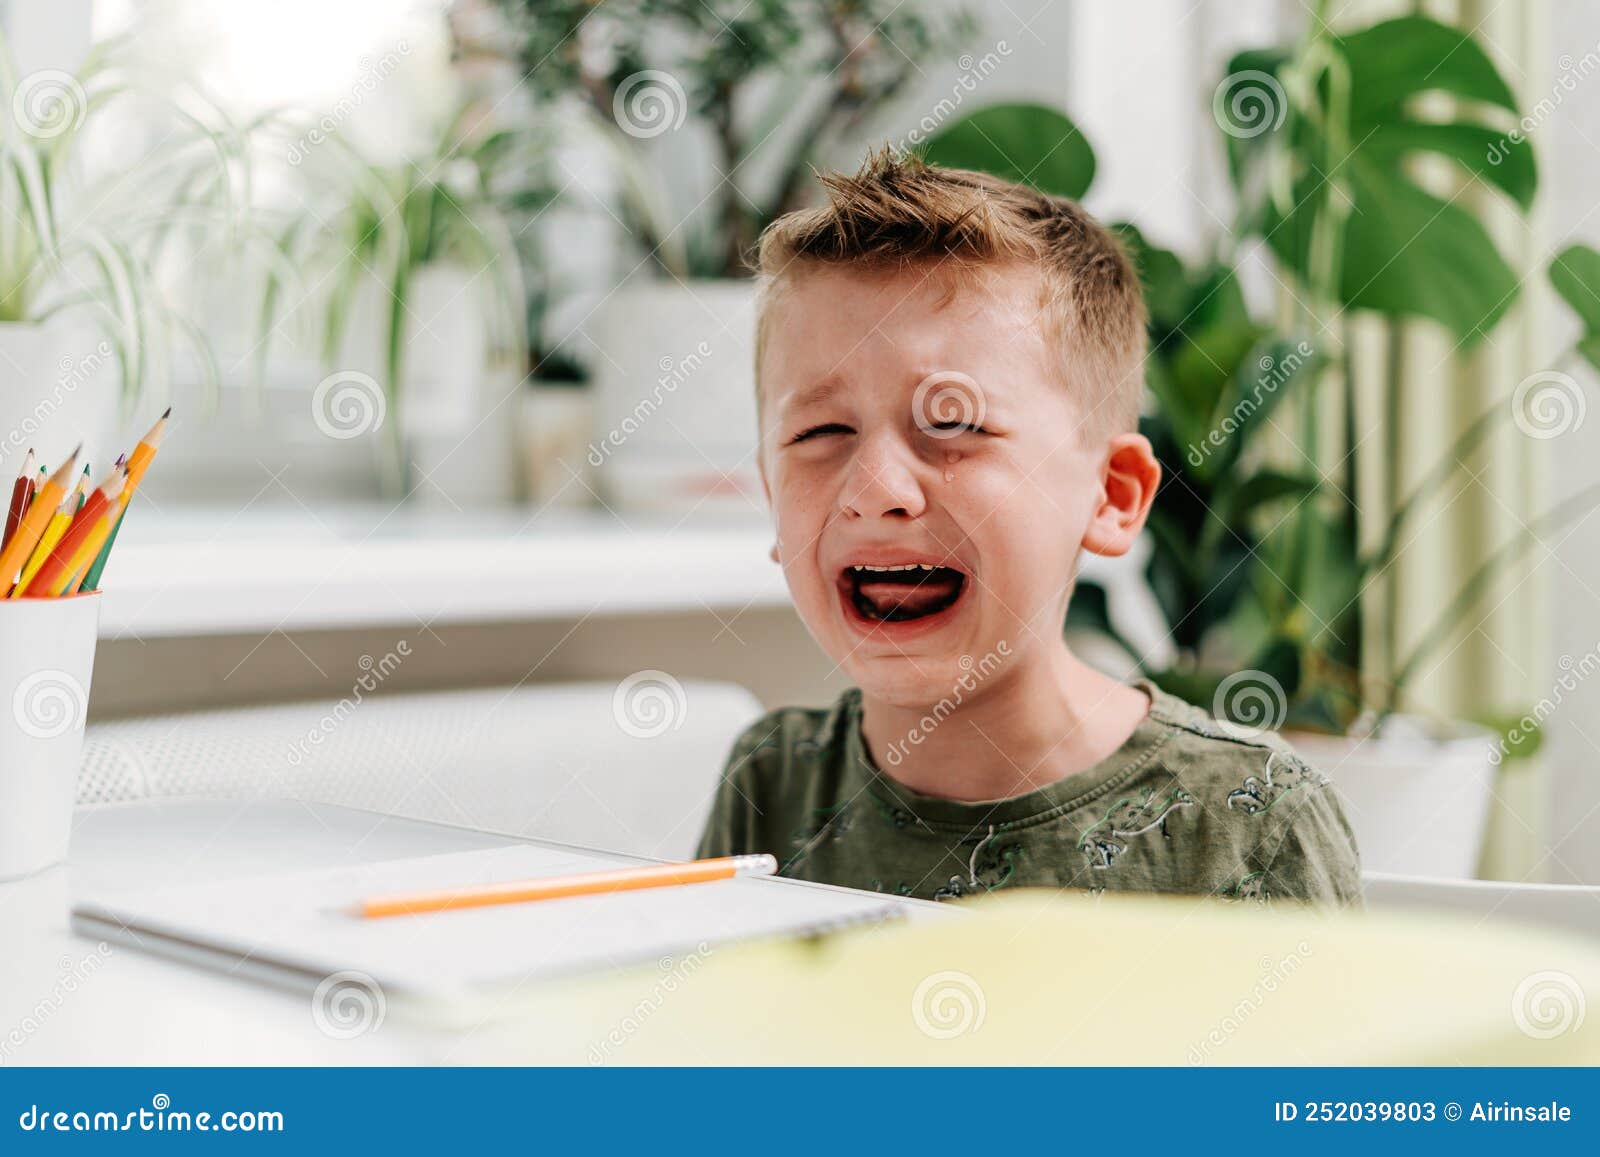 my kid cries during homework